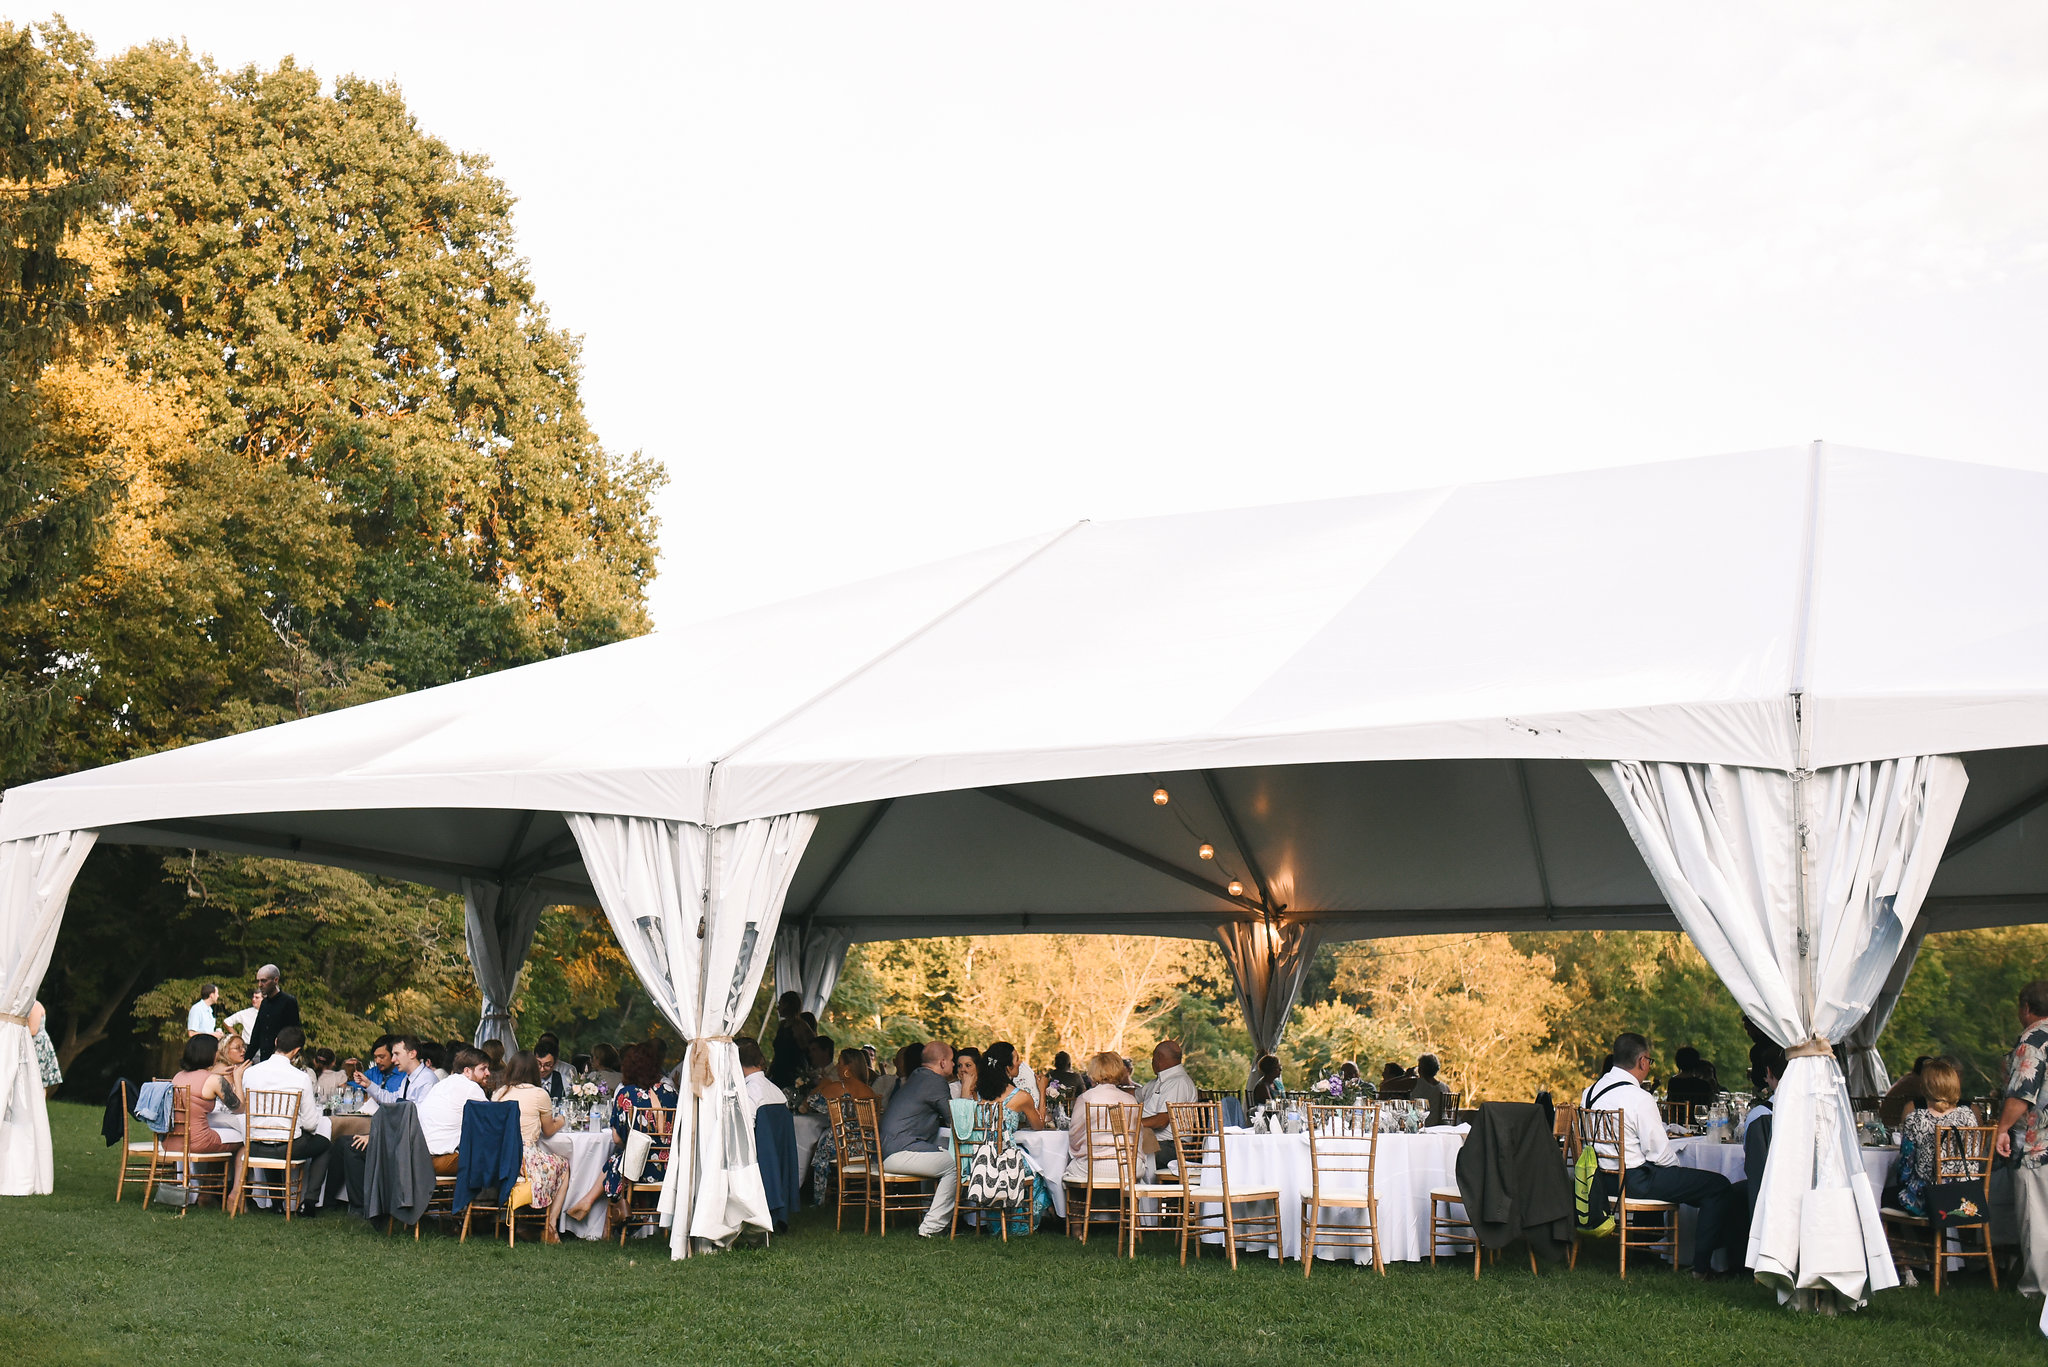  Maryland, Eastern Shore, Baltimore Wedding Photographer, Romantic, Boho, Backyard Wedding, Nature, Outdoor Reception Under White Tent, Wedding Guests Enjoying Reception 